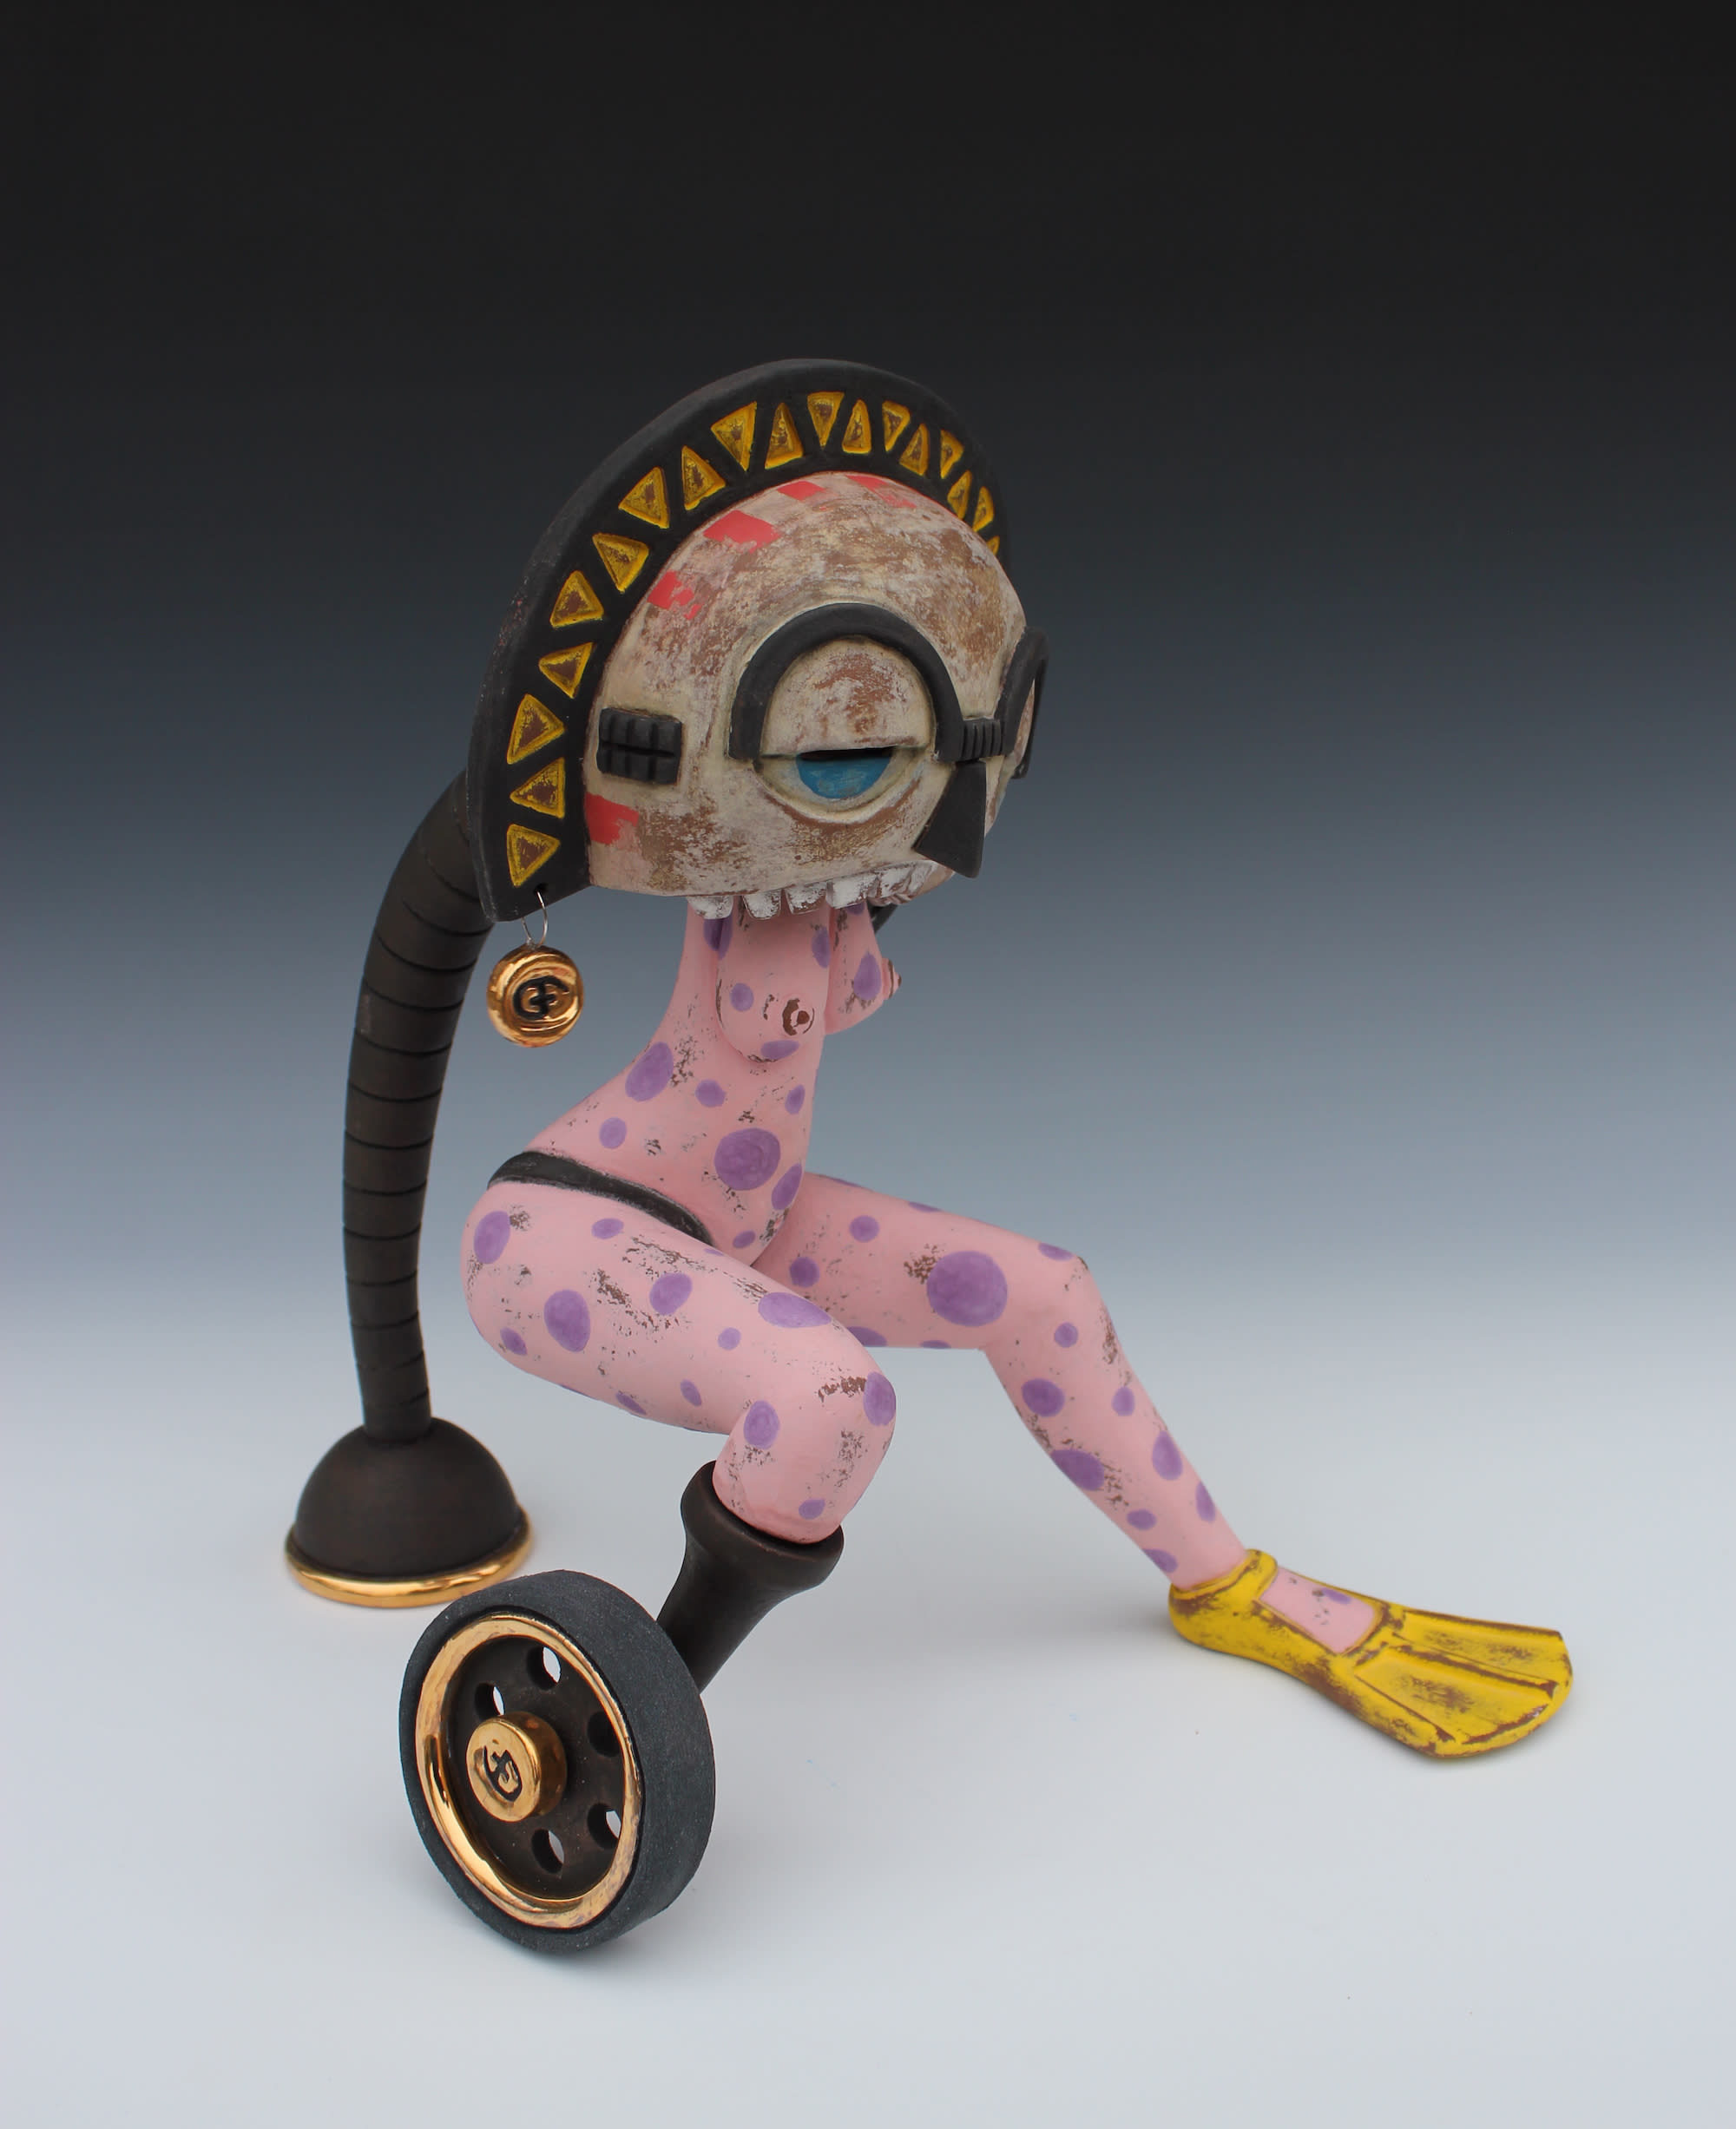 Contemporary fertility figure w cyborg prosthetic i4npic